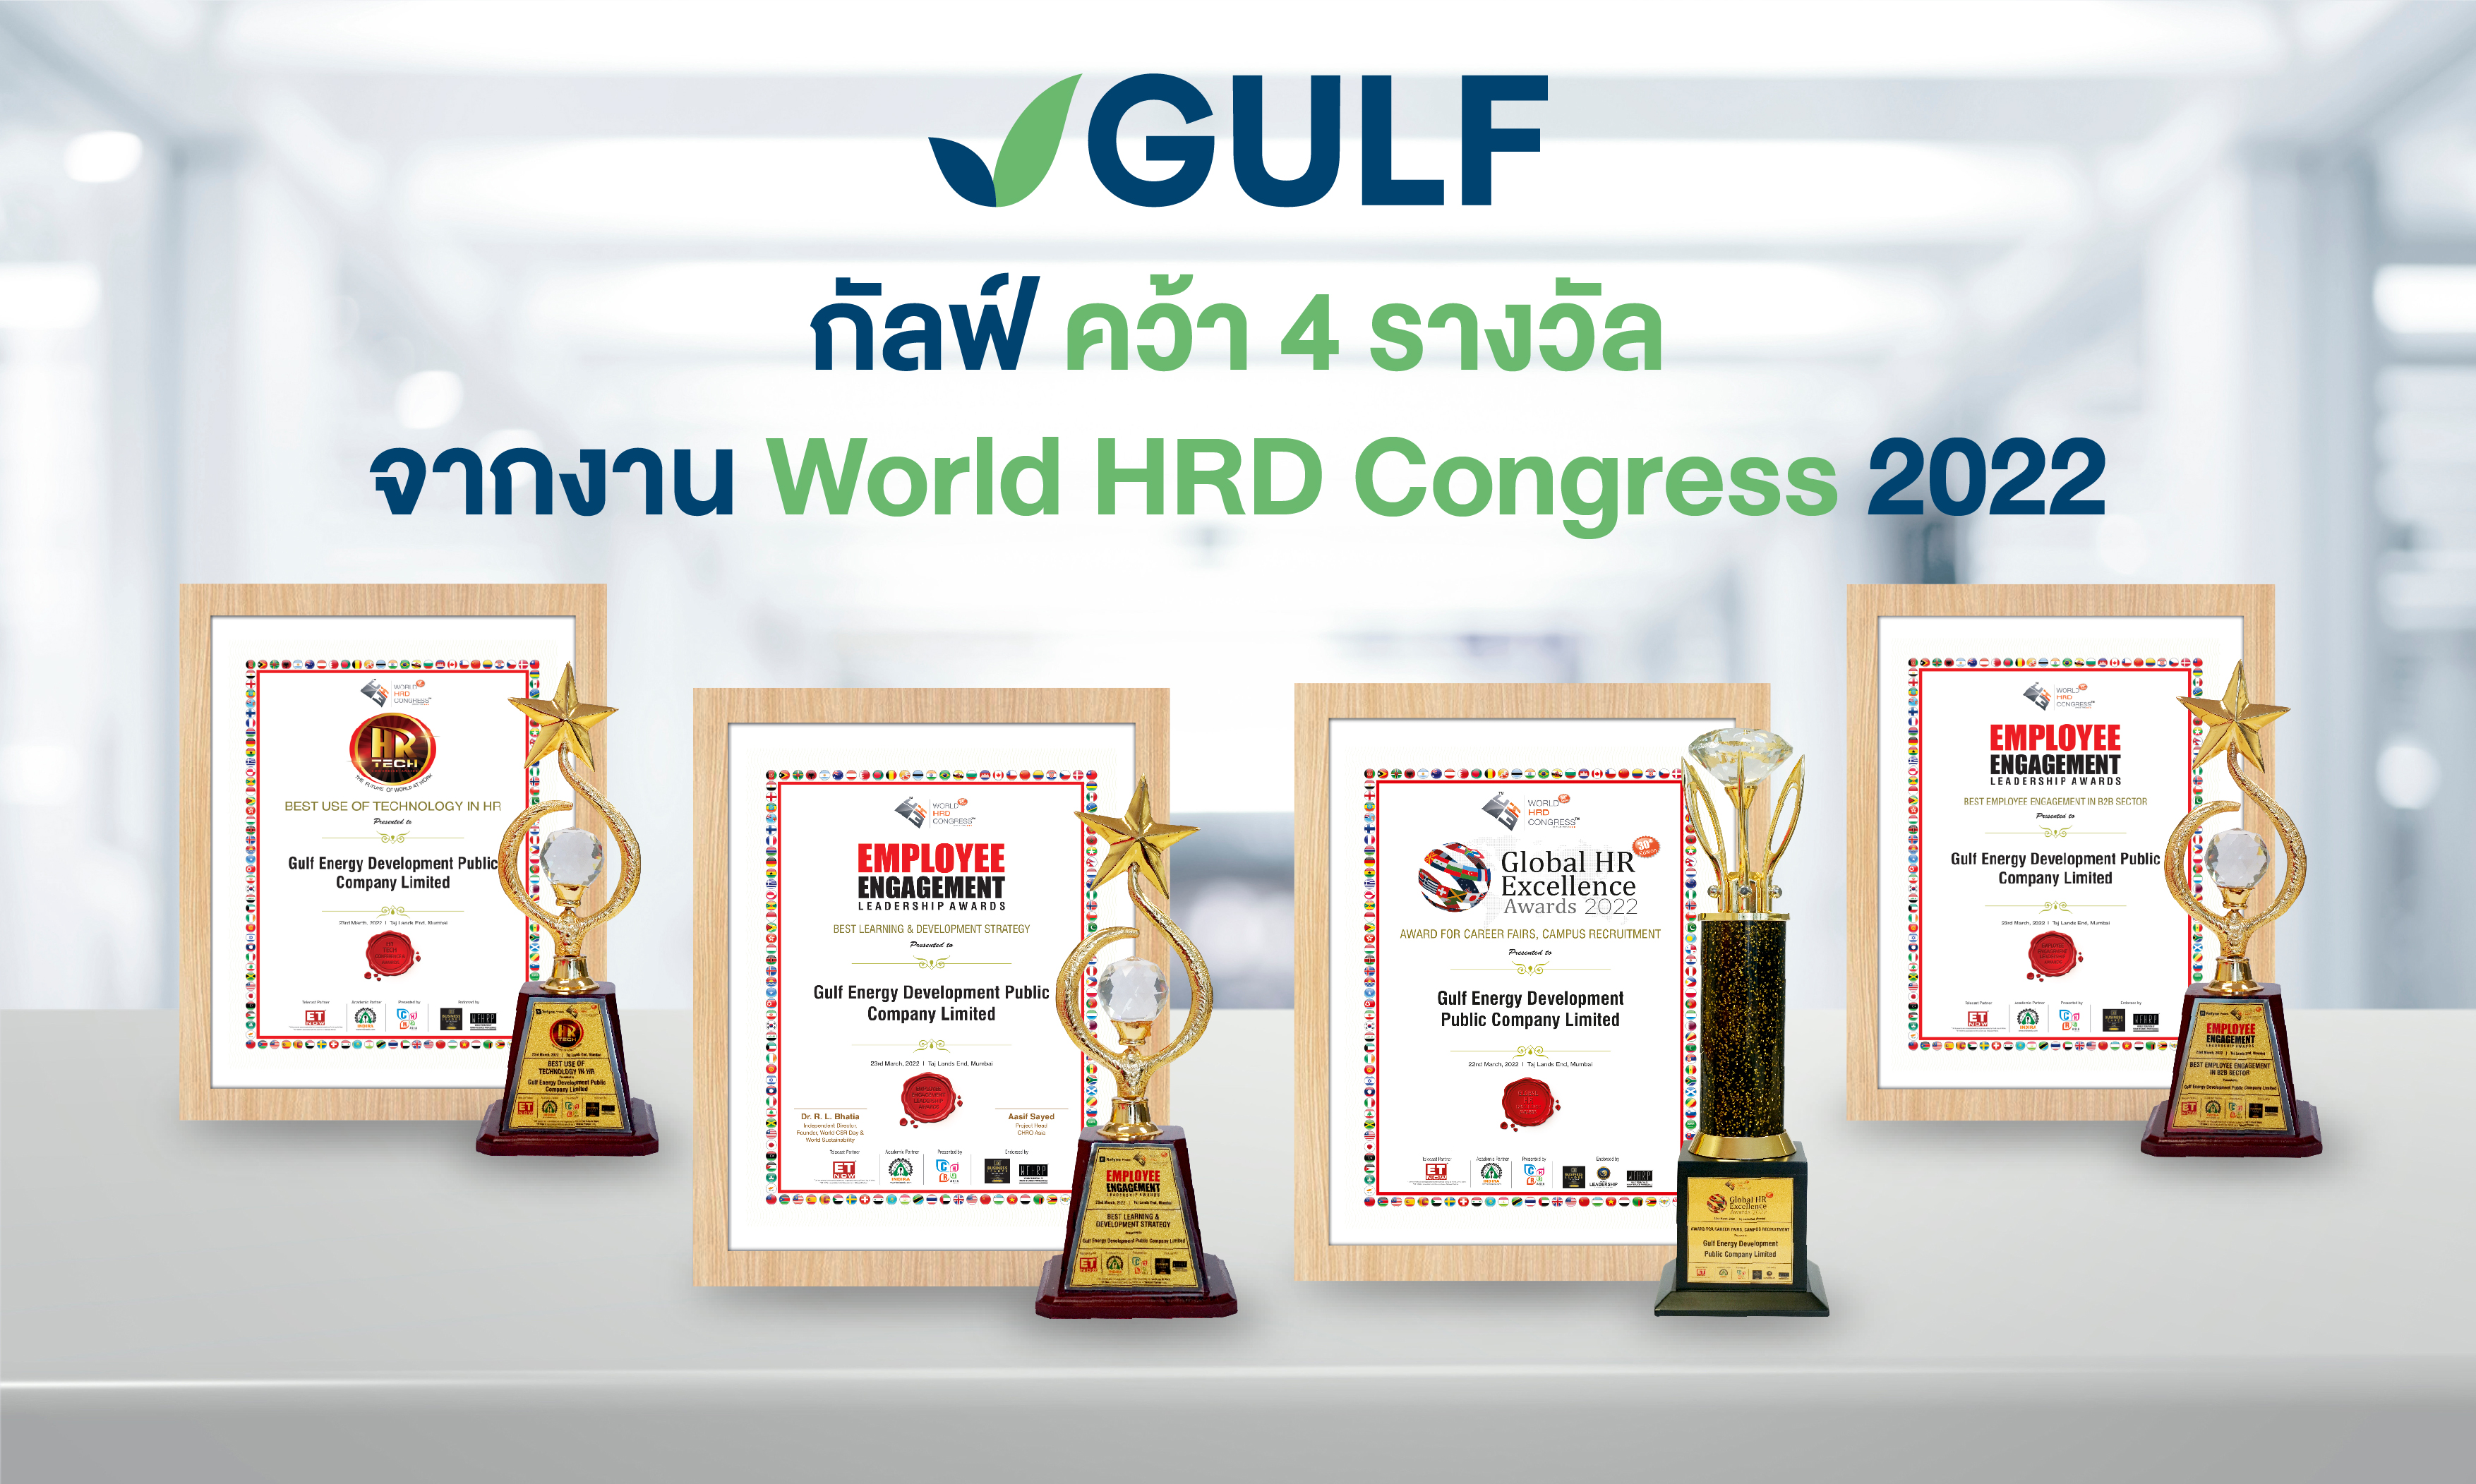 GULF wins 4 prestigious awards from World HRD Congress 2022, reiterating best-in-class HR management